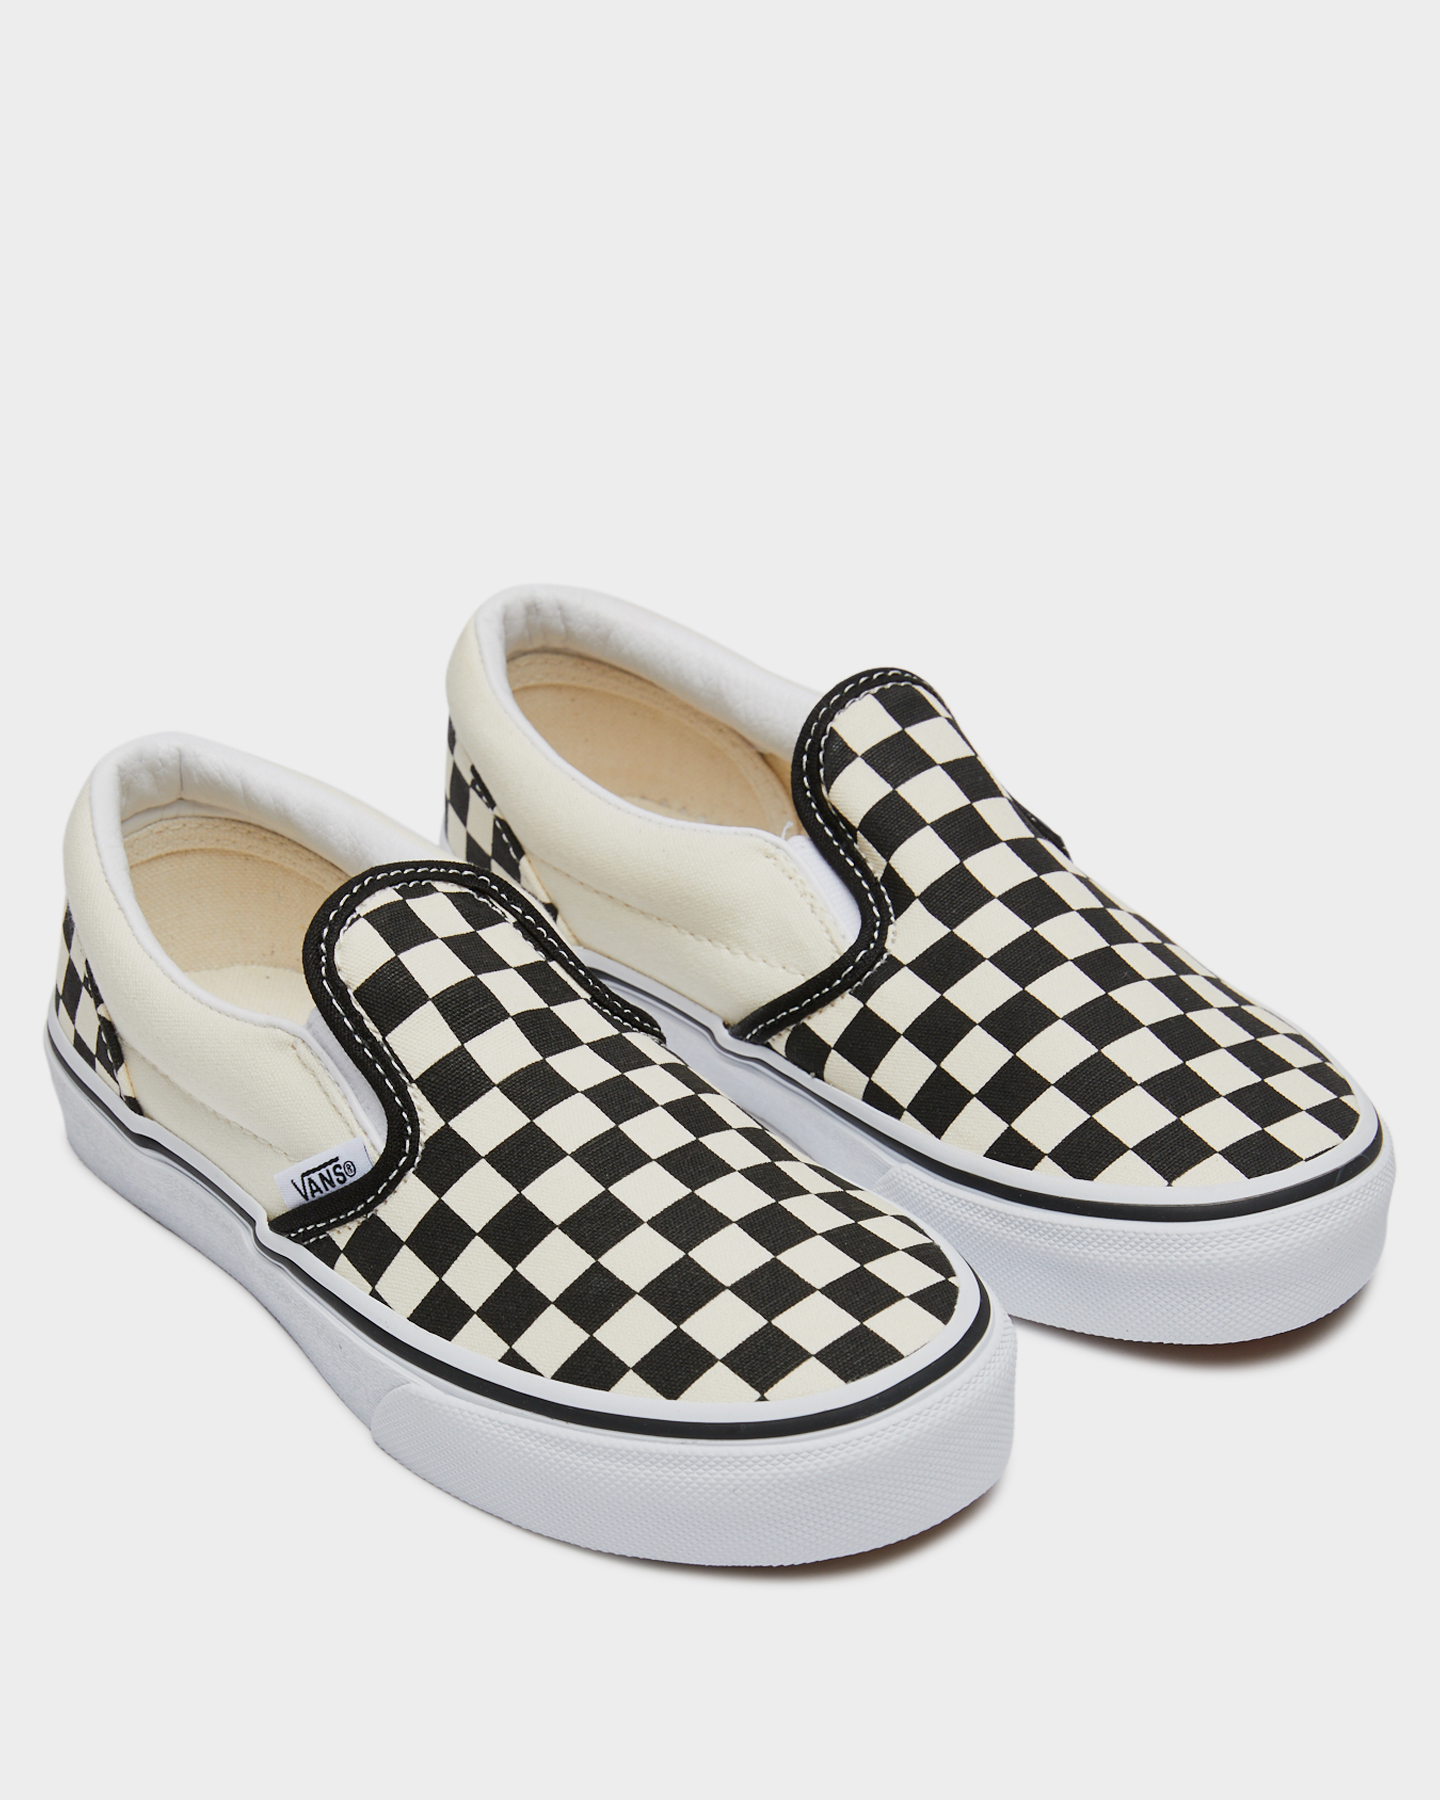 Vans Kids Classic Slip-On Checkerboard - Black White Check